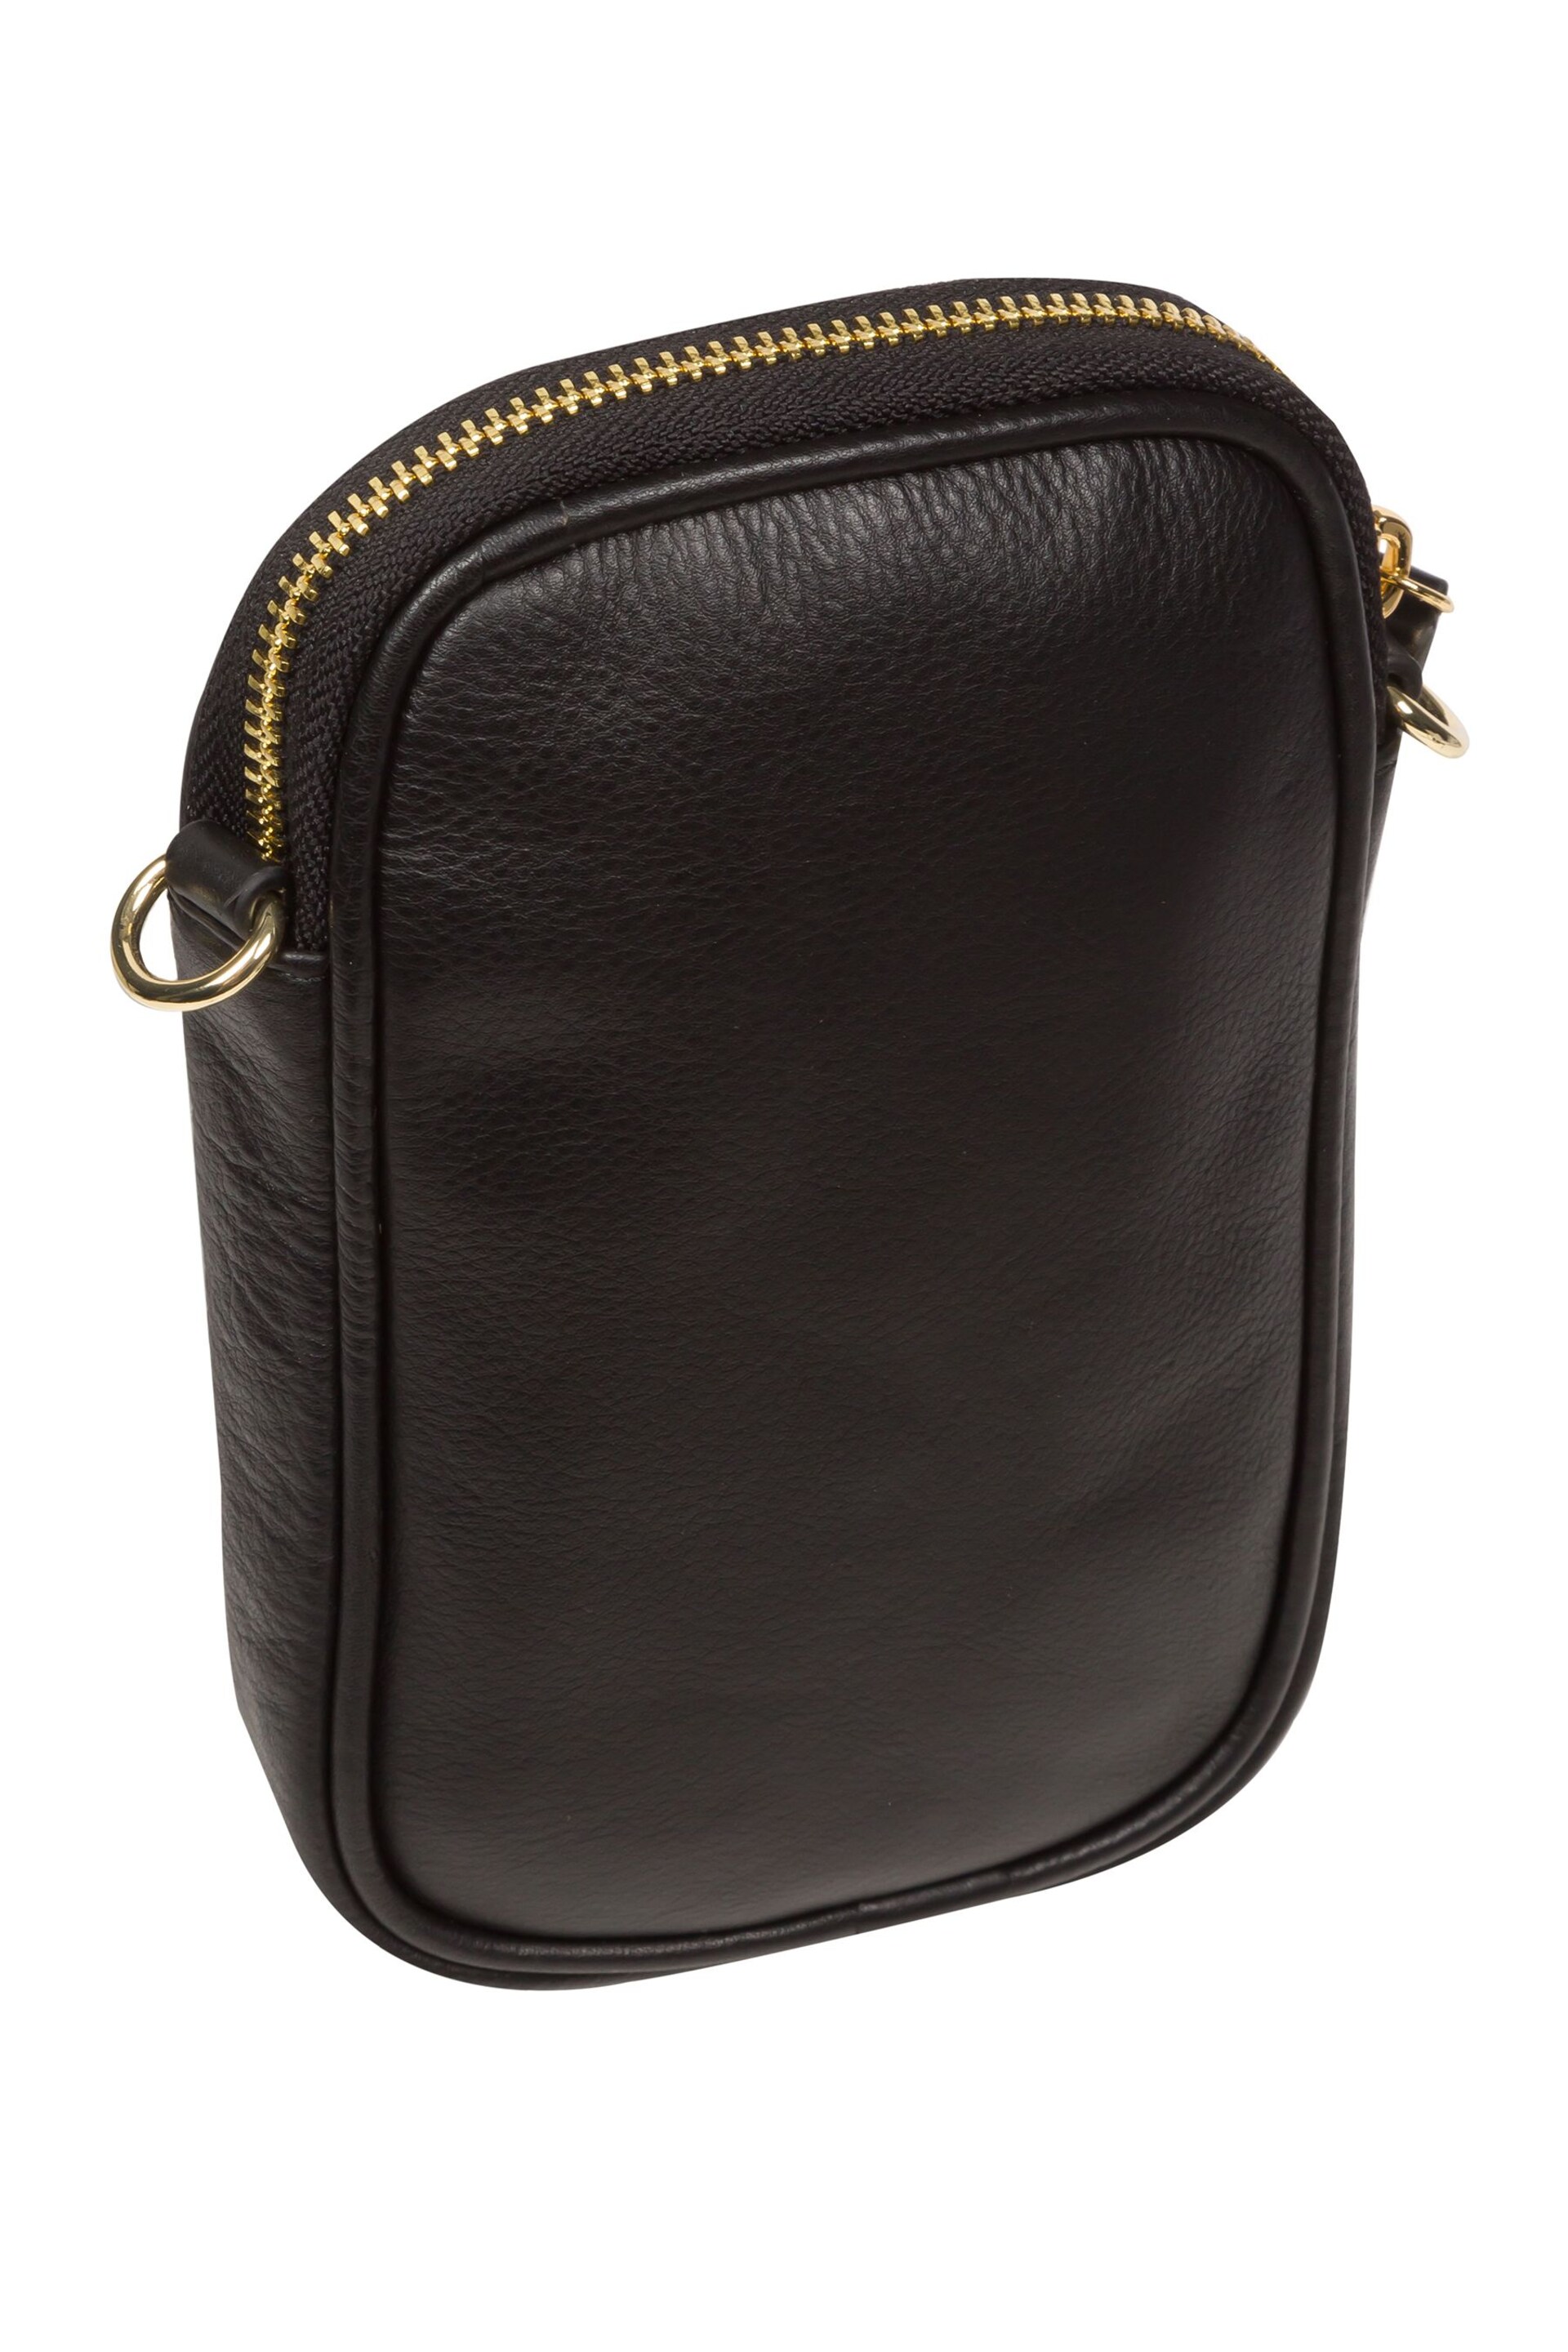 Pure Luxuries London Alaina Nappa Leather Cross-Body Phone Bag - Image 4 of 7